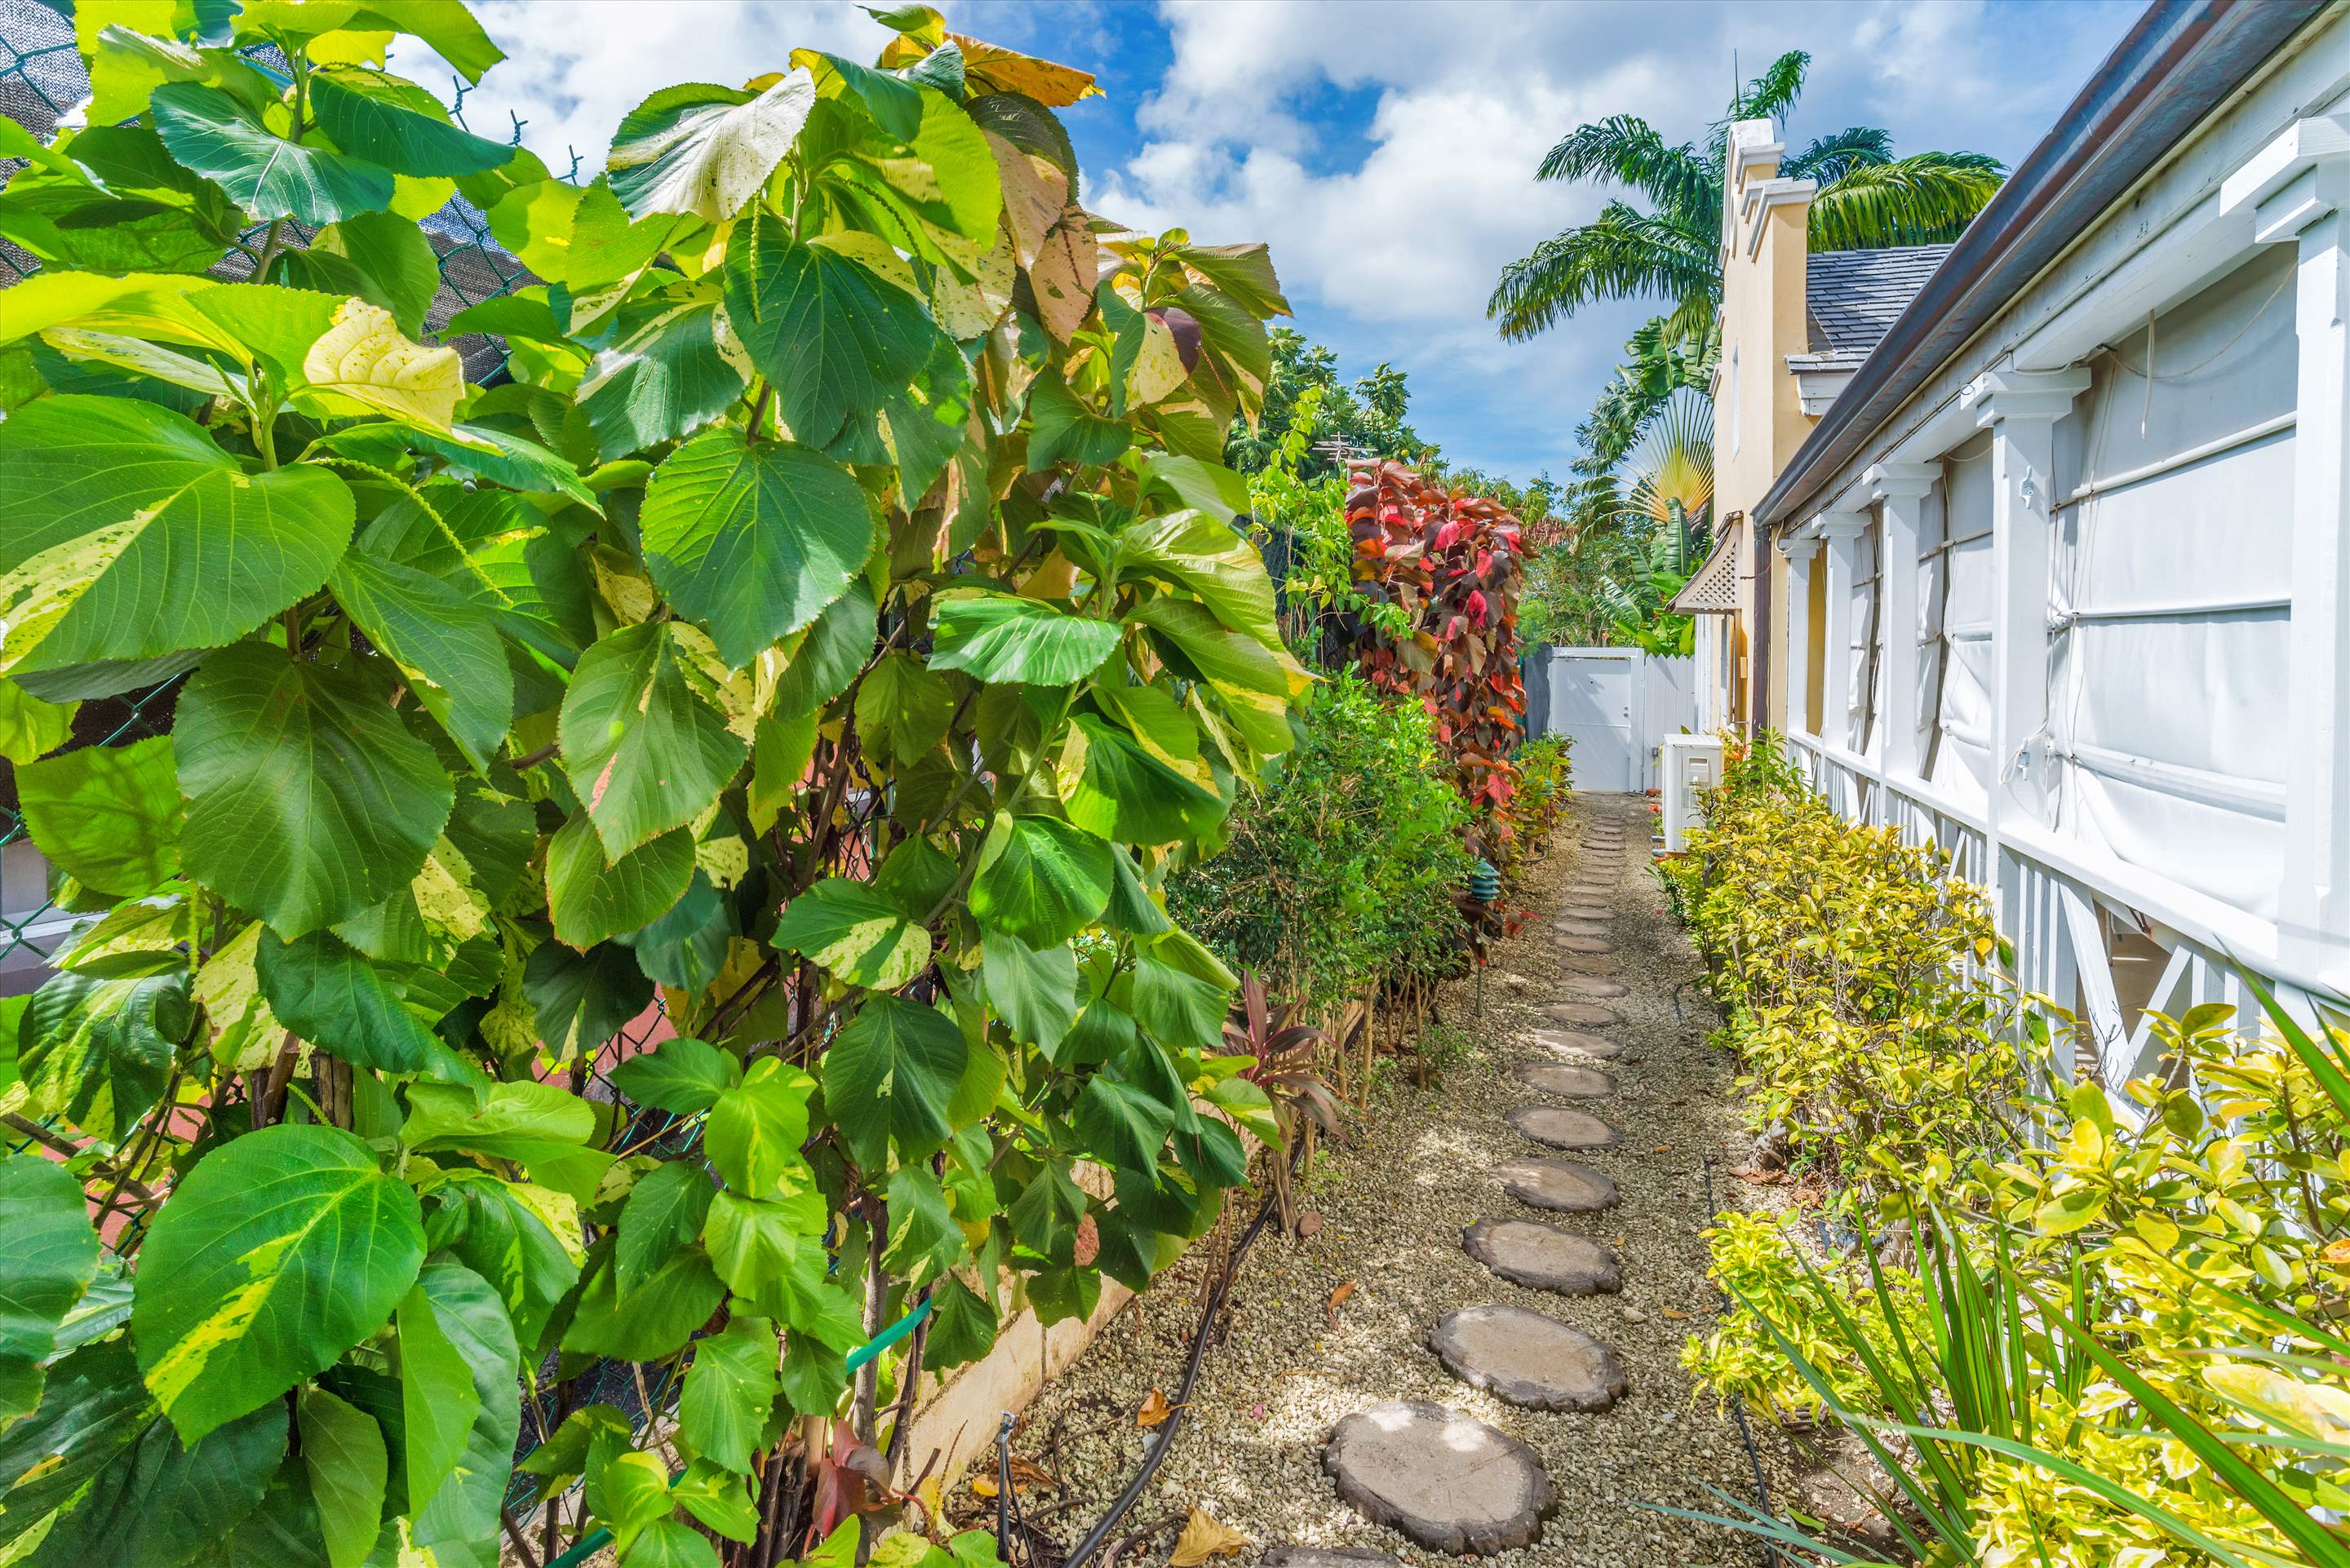 Porters Court 3, 2 bedroom, 2 bedroom villa in St. James & West Coast, Barbados Photo #13